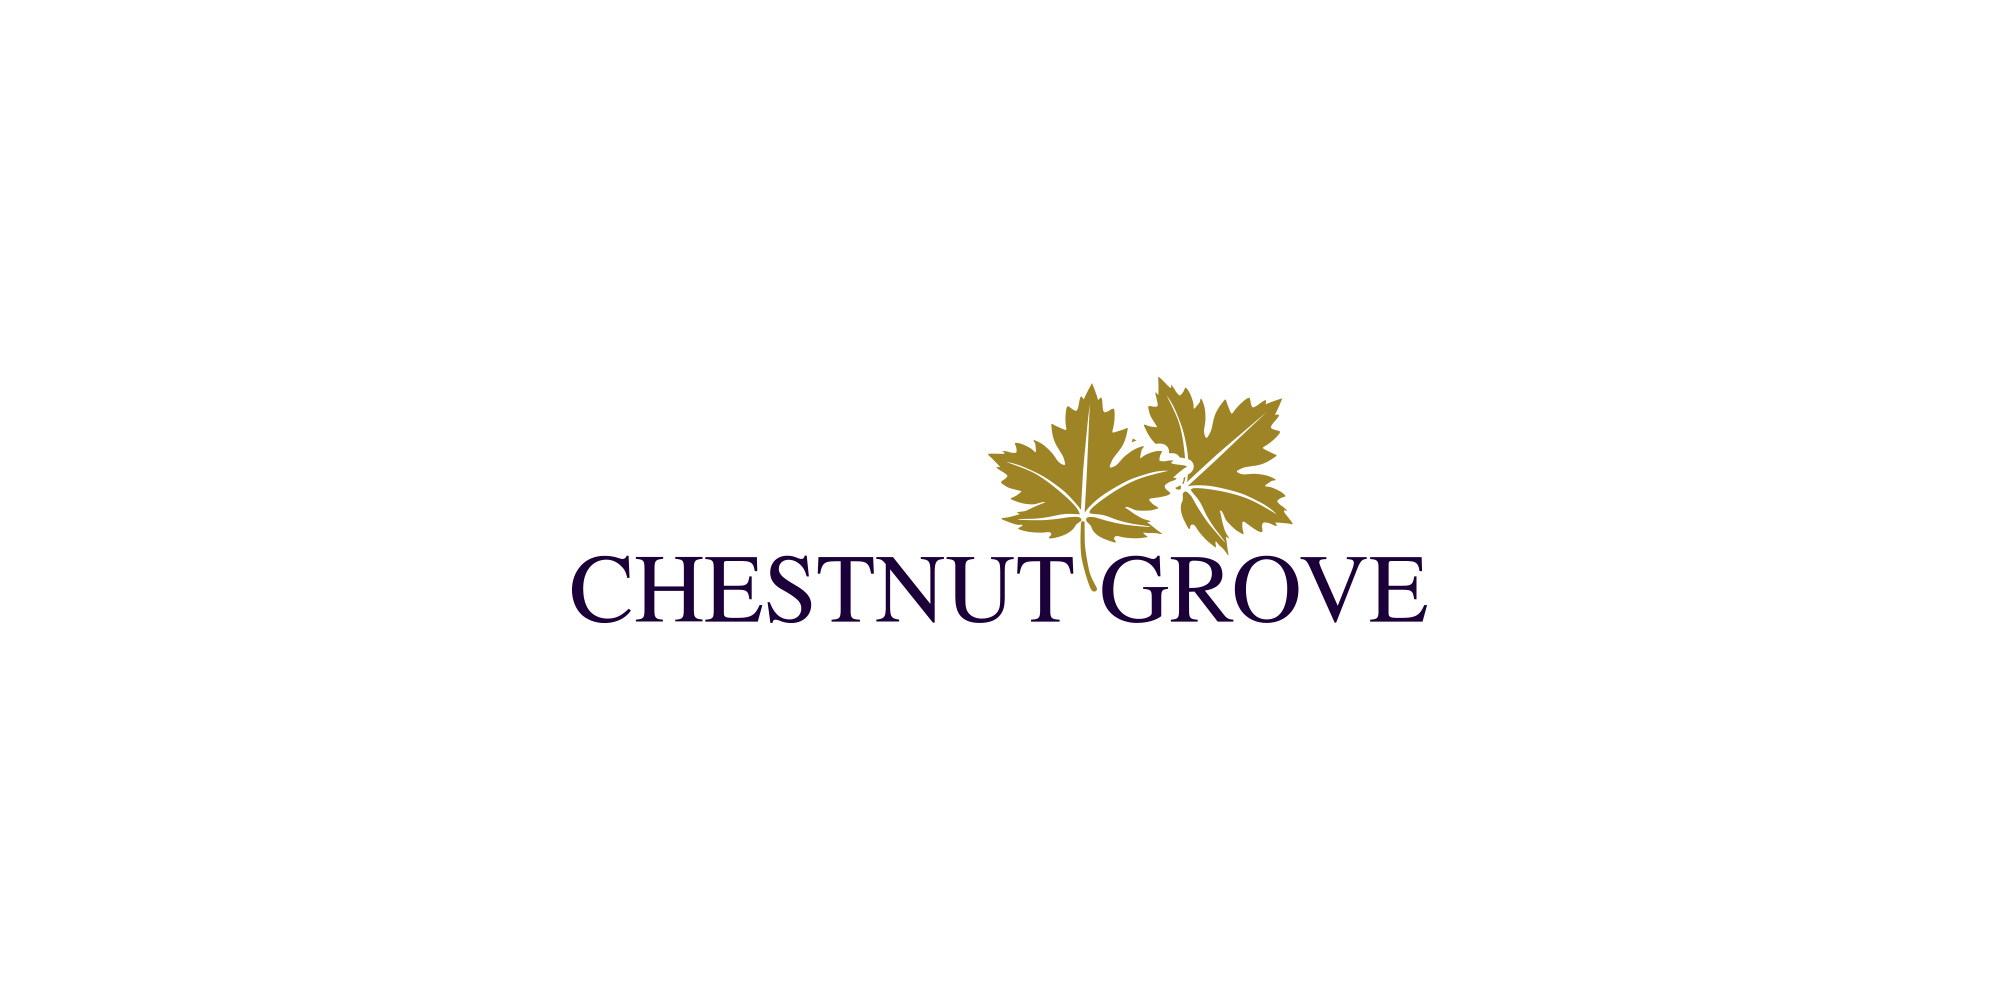 Chestnut Grove, print and digital based design and development